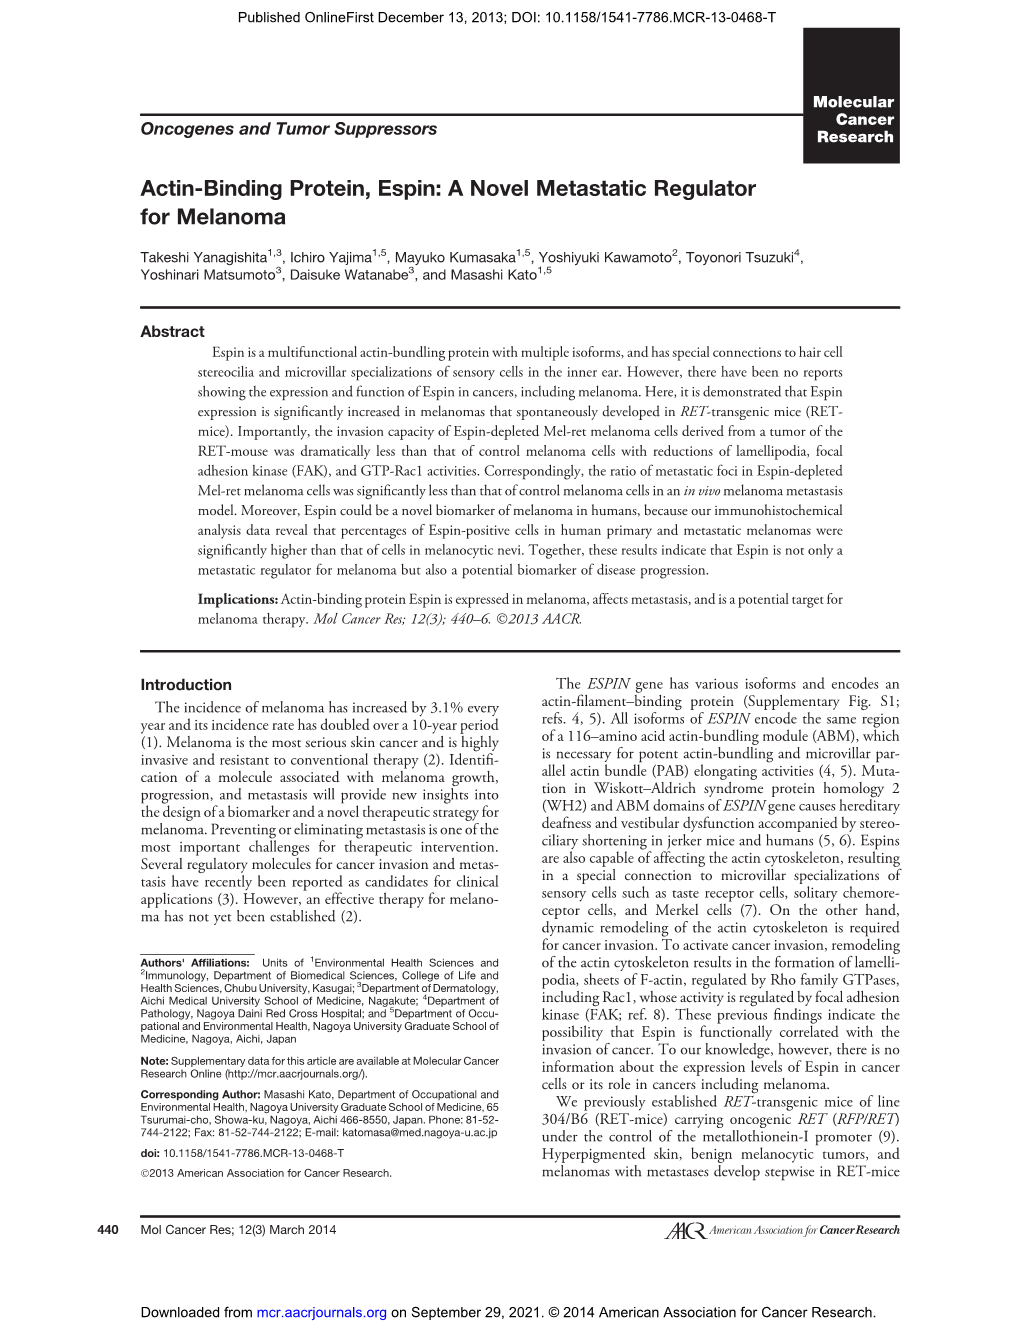 Actin-Binding Protein, Espin: a Novel Metastatic Regulator for Melanoma